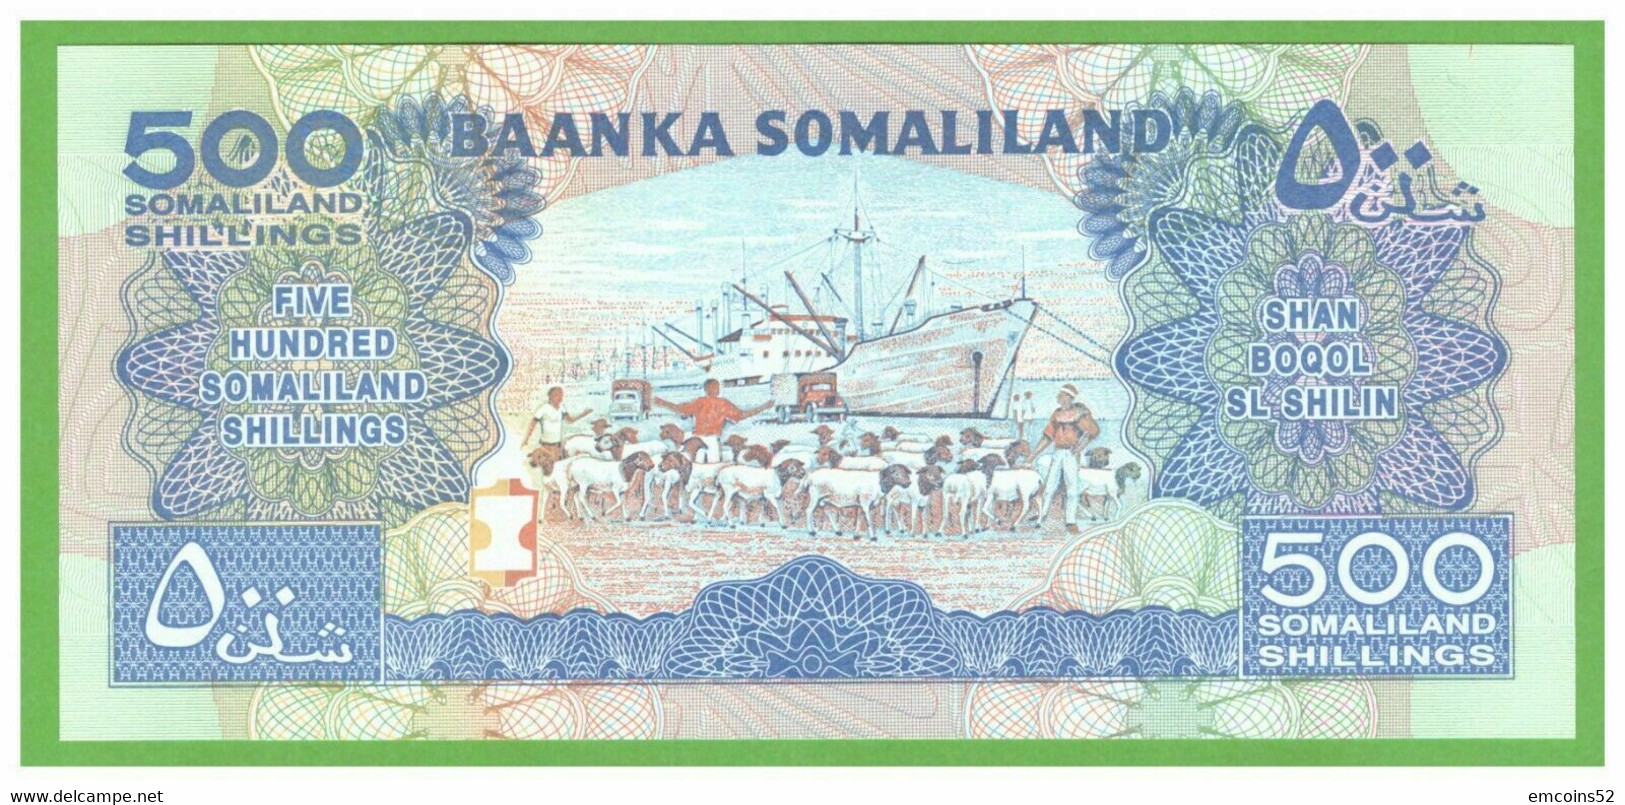 SOMALILAND 500 SHILLINGS 1996  P-6b  UNC - Somalie